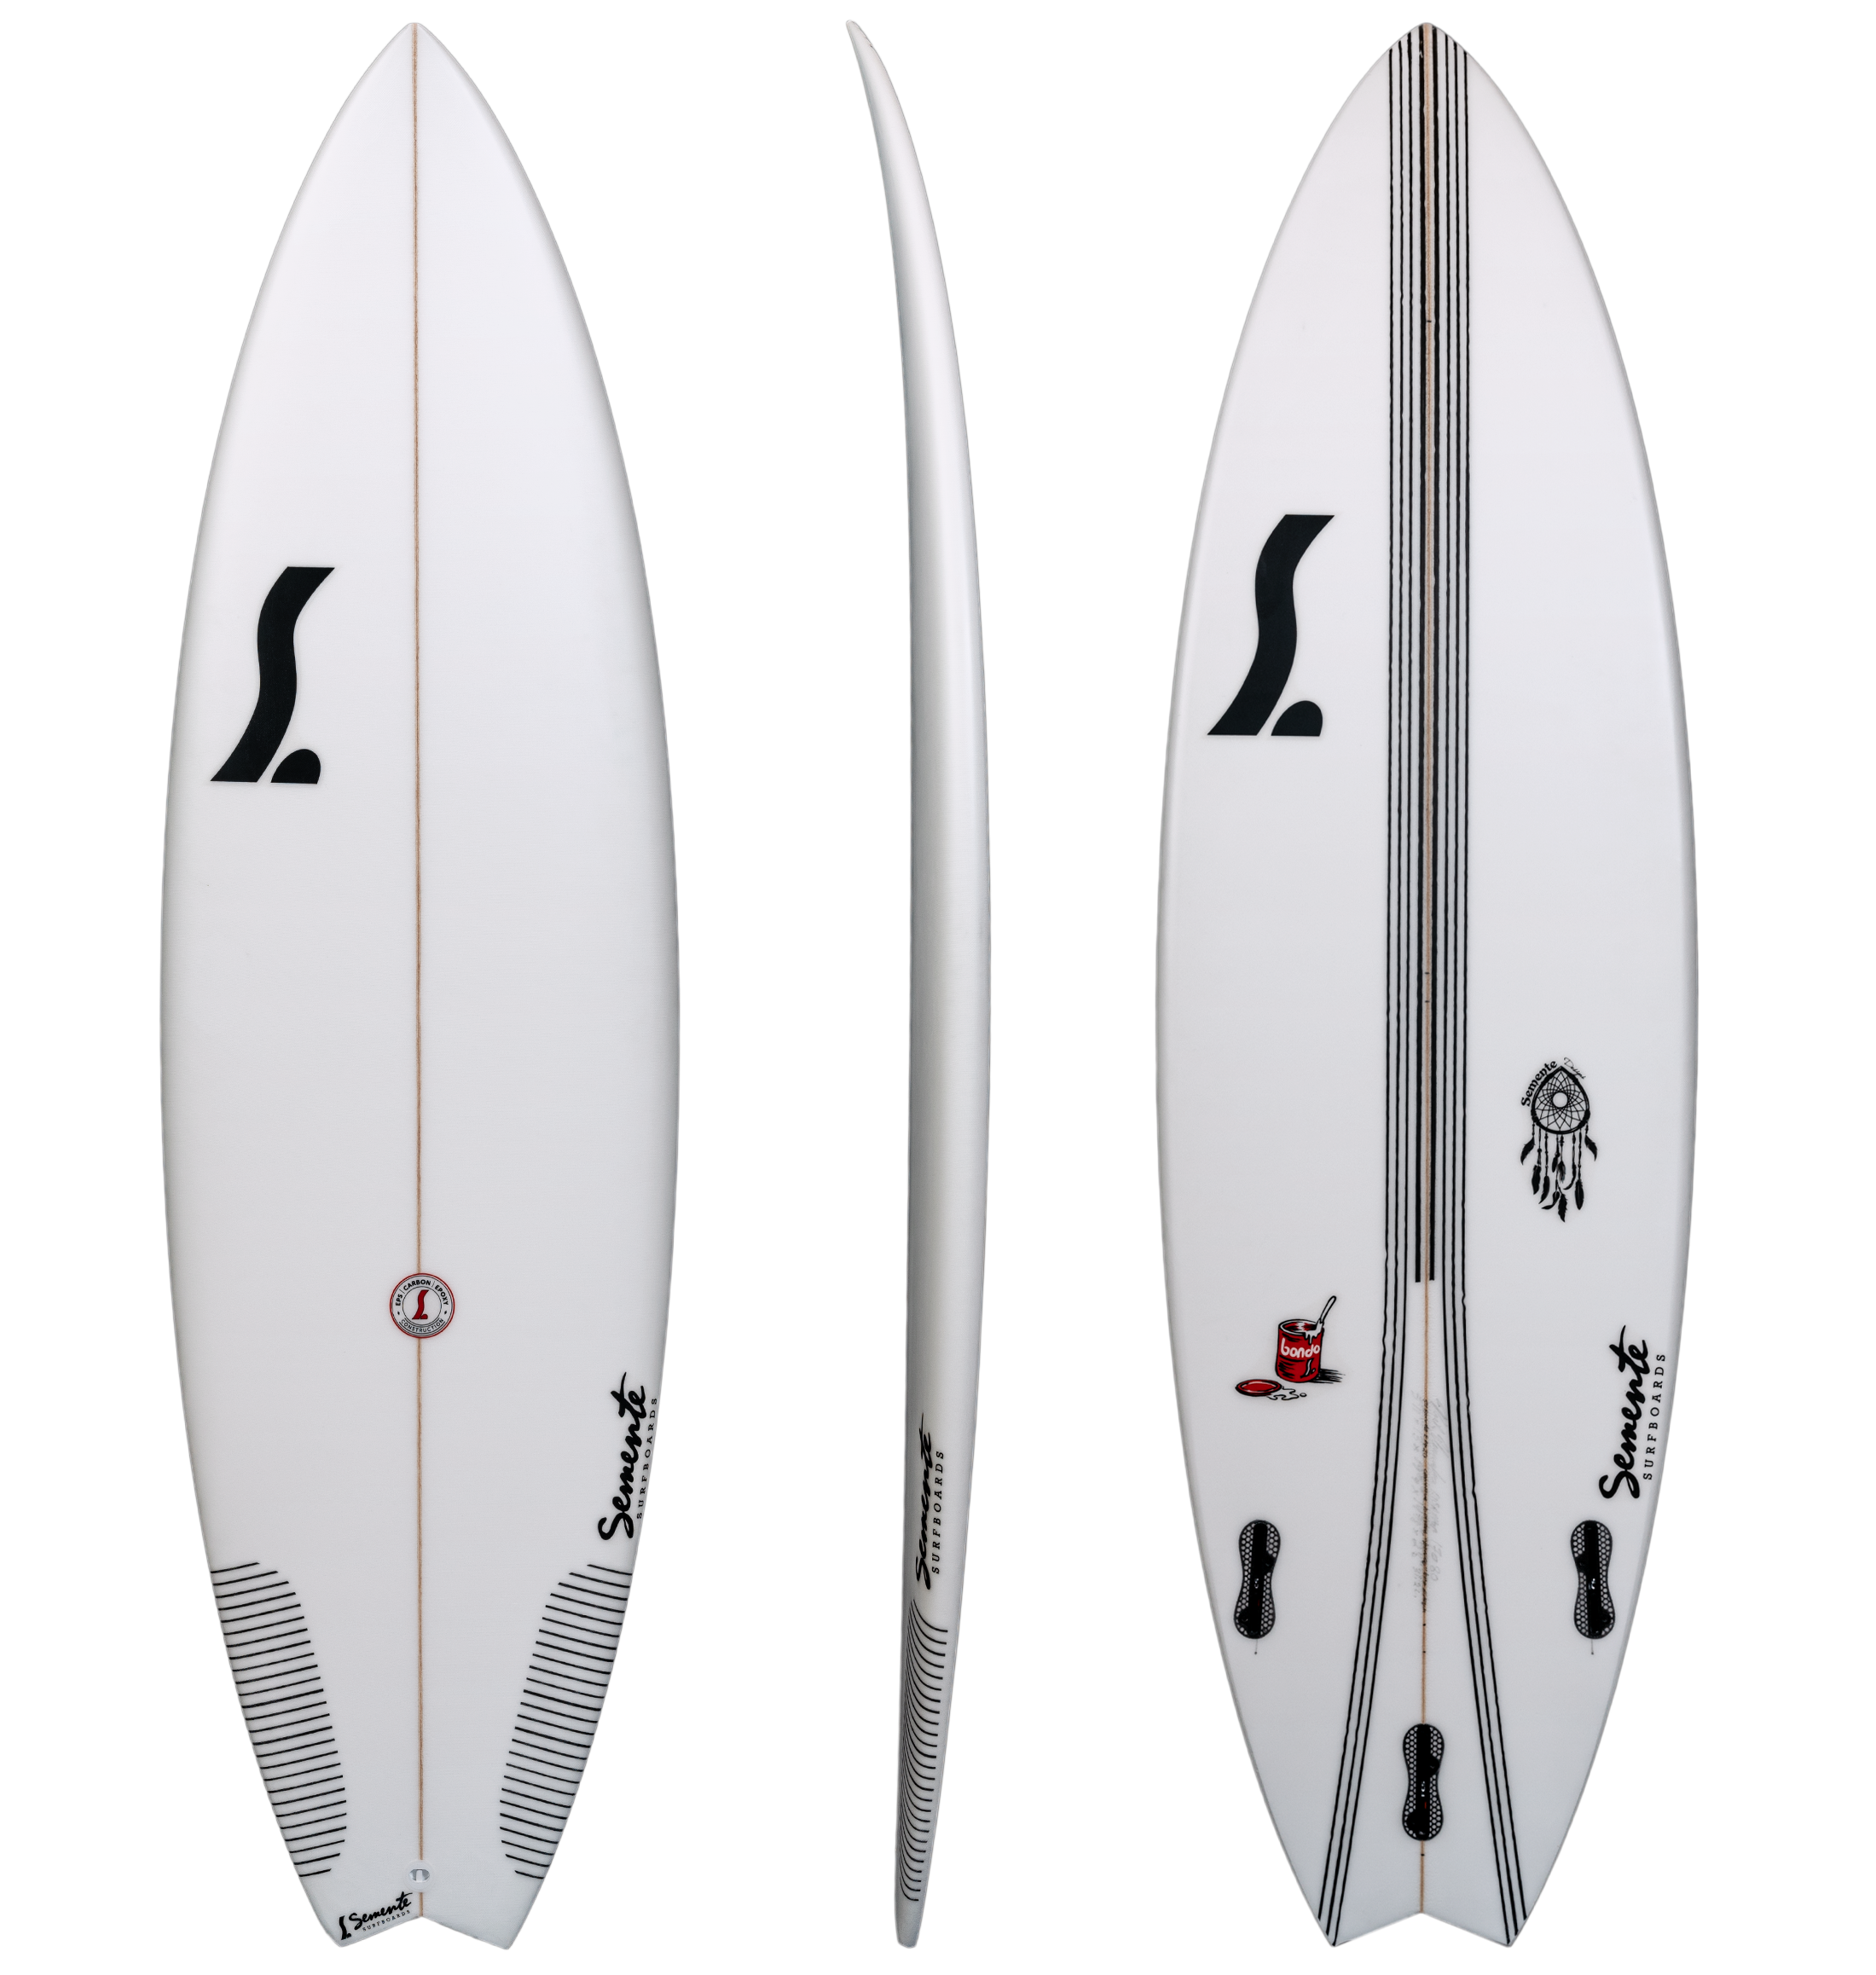 Bondo EPS semente surfboard model